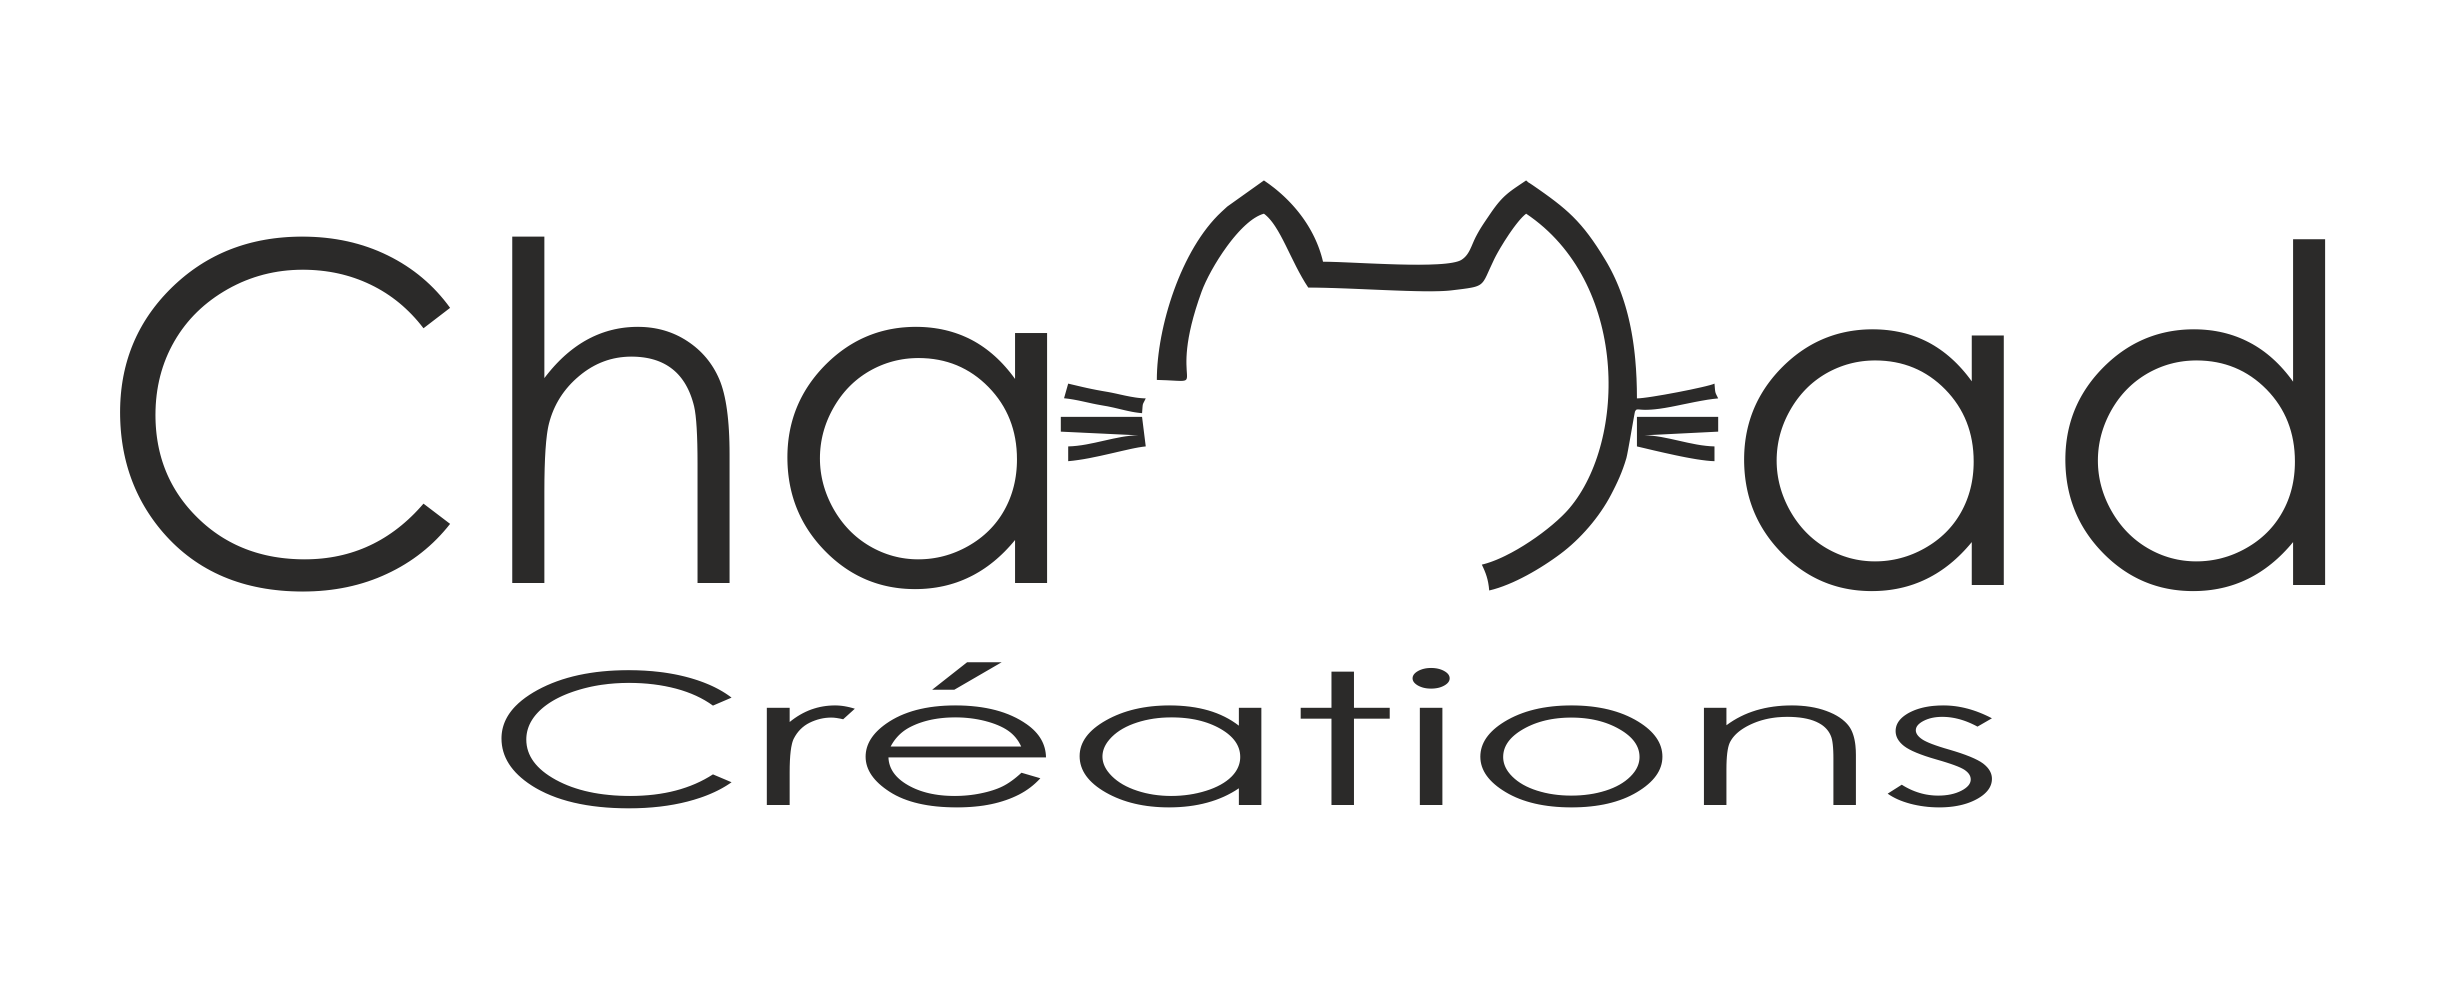 Chamad-creation Logo